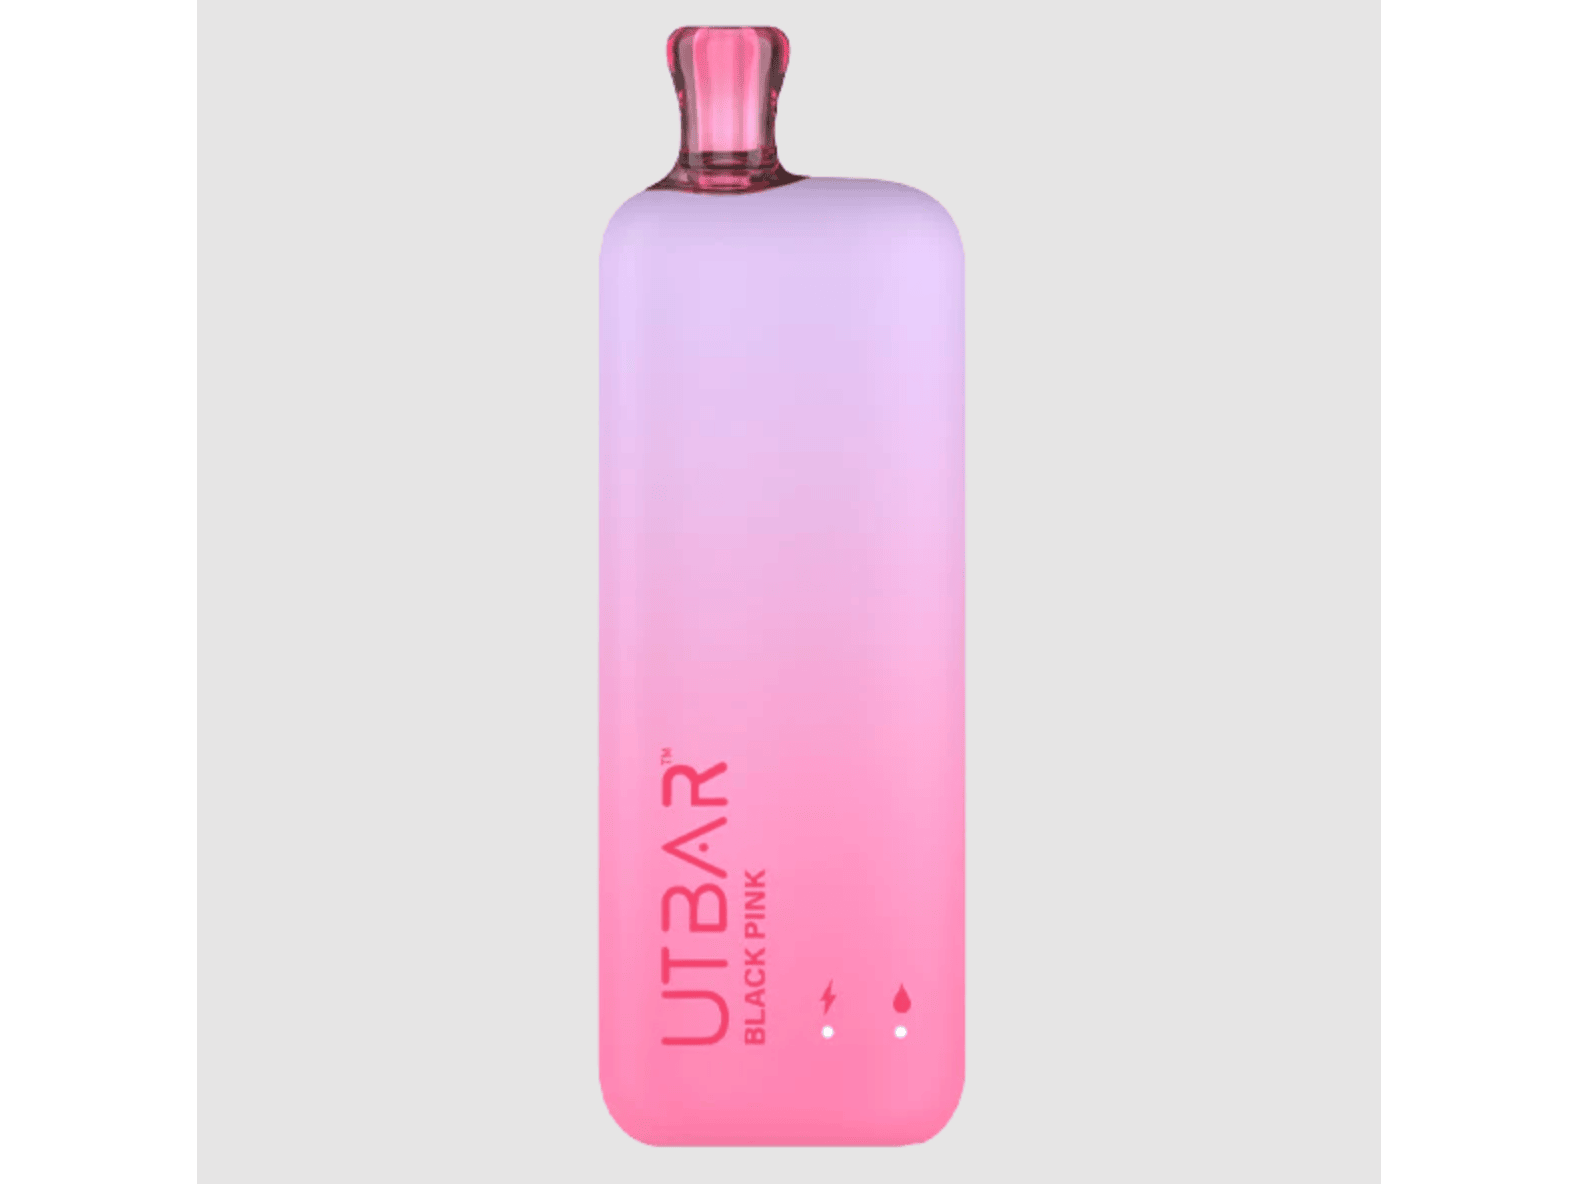 UT Bar Black Pink flavored disposable vape device.